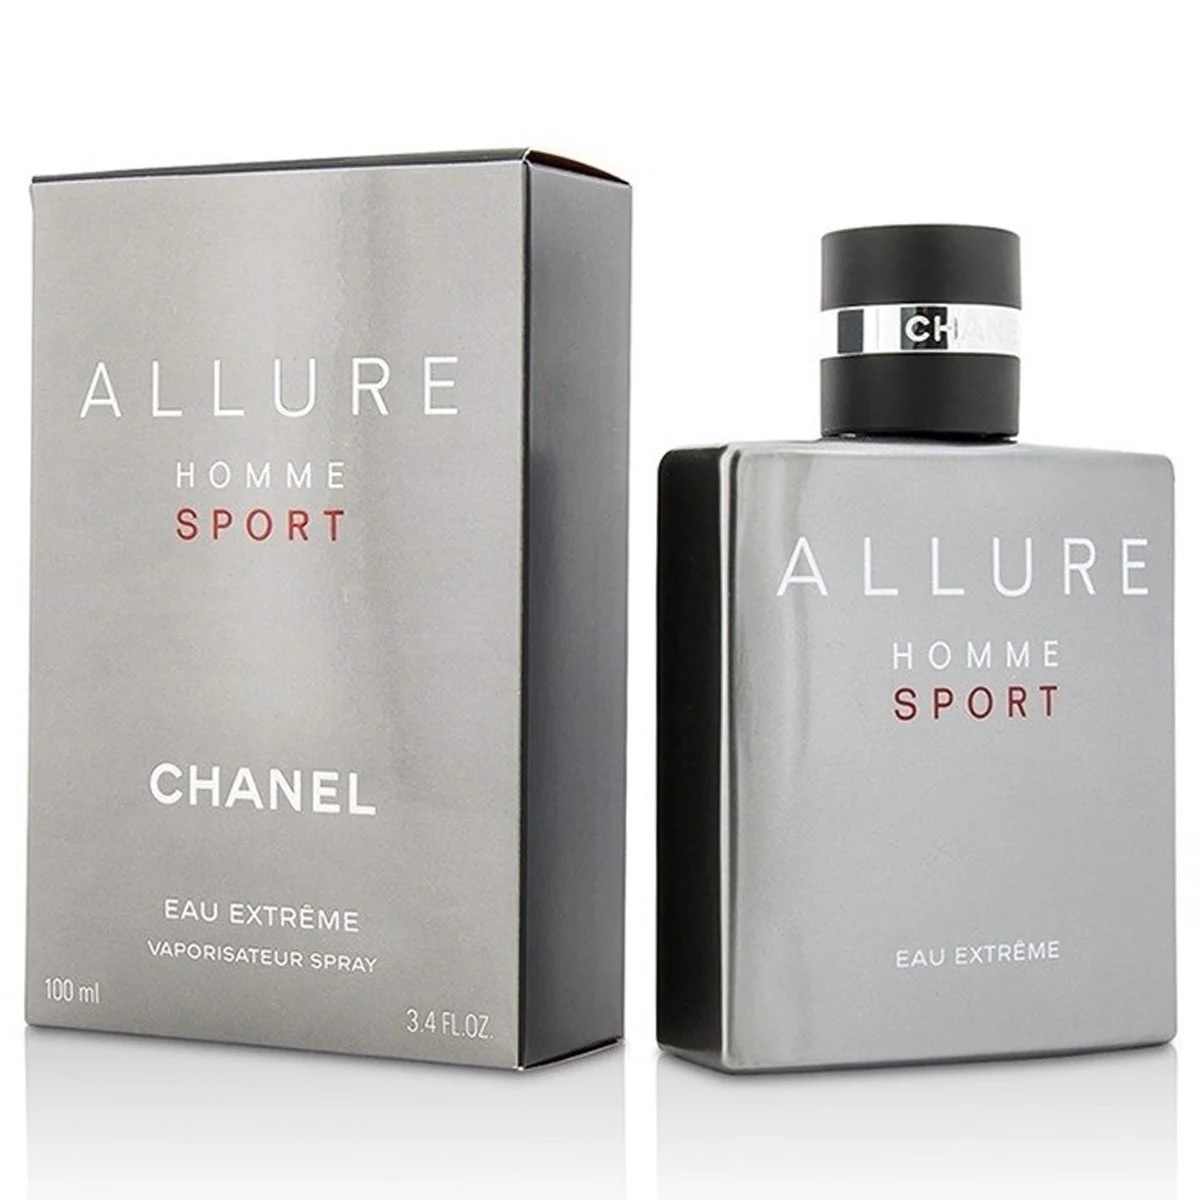 Amazoncom Chanel Allure Homme Sport Eau De Toilette Spray 17 oz 50 ml   Chanel Sports  Outdoors